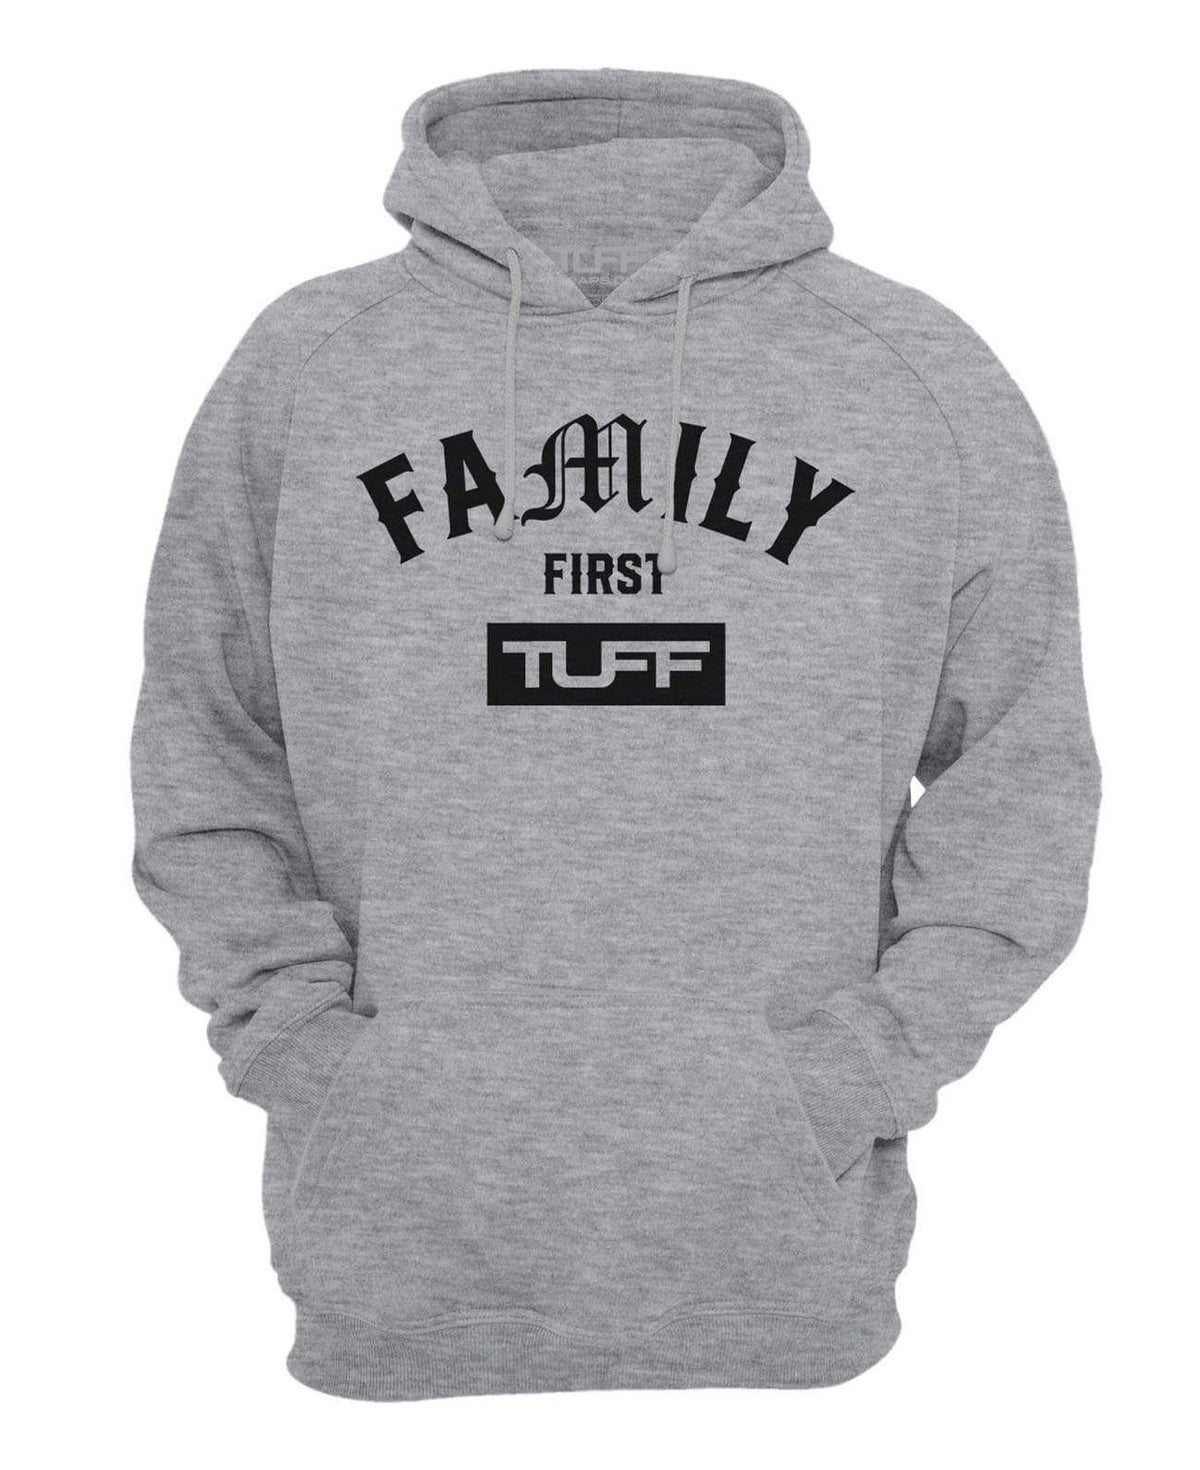 Family First Hooded Sweatshirt XS / Gray TuffWraps.com